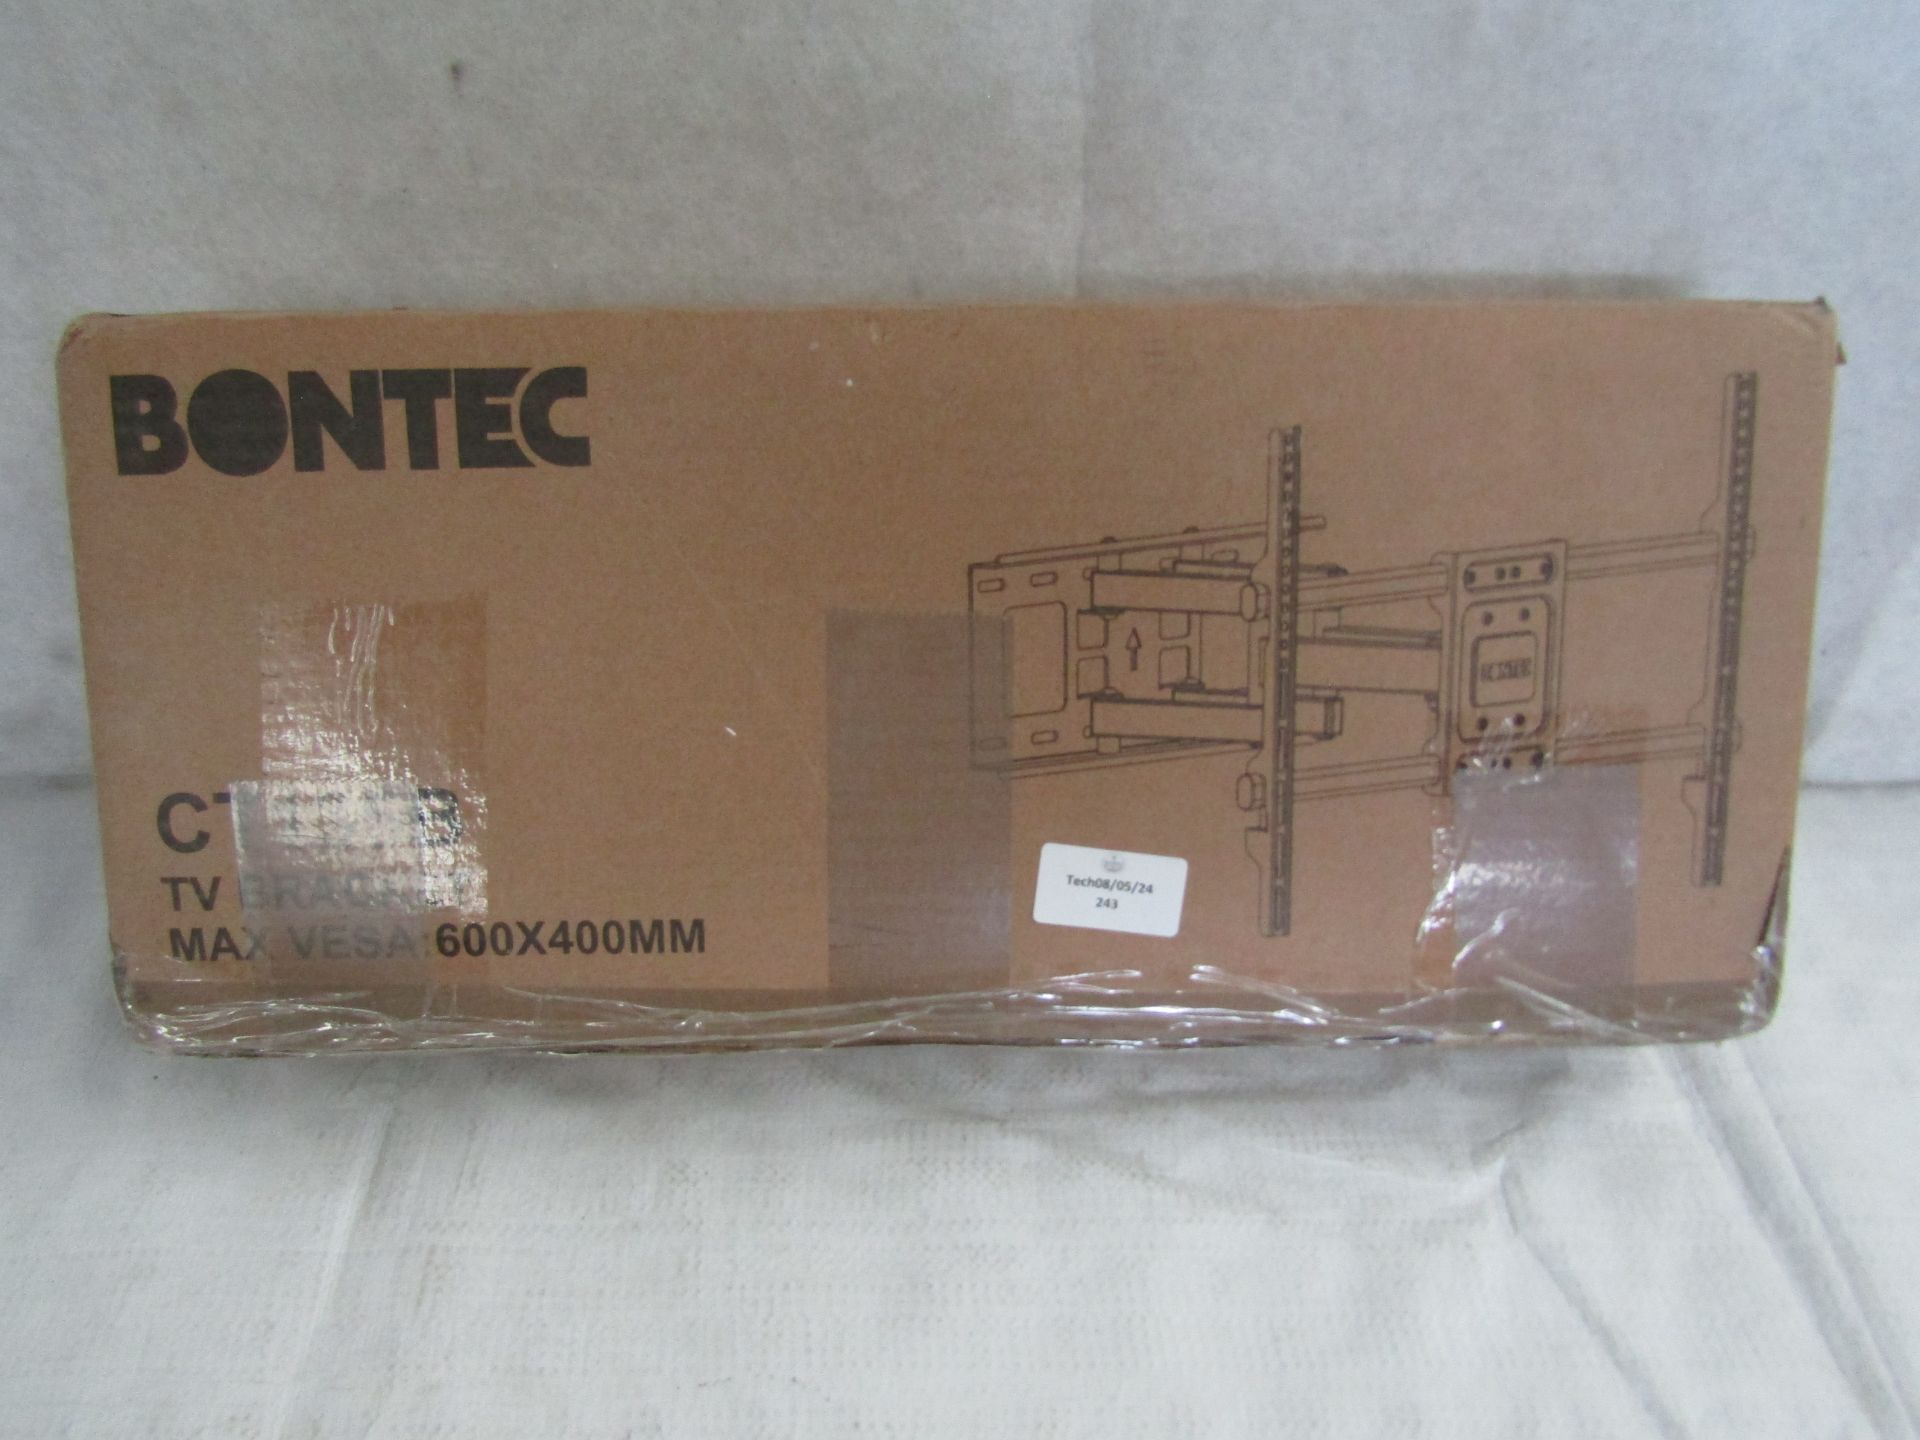 Bontec Tv Bracket, 600x400mm Unchecked & Boxed.